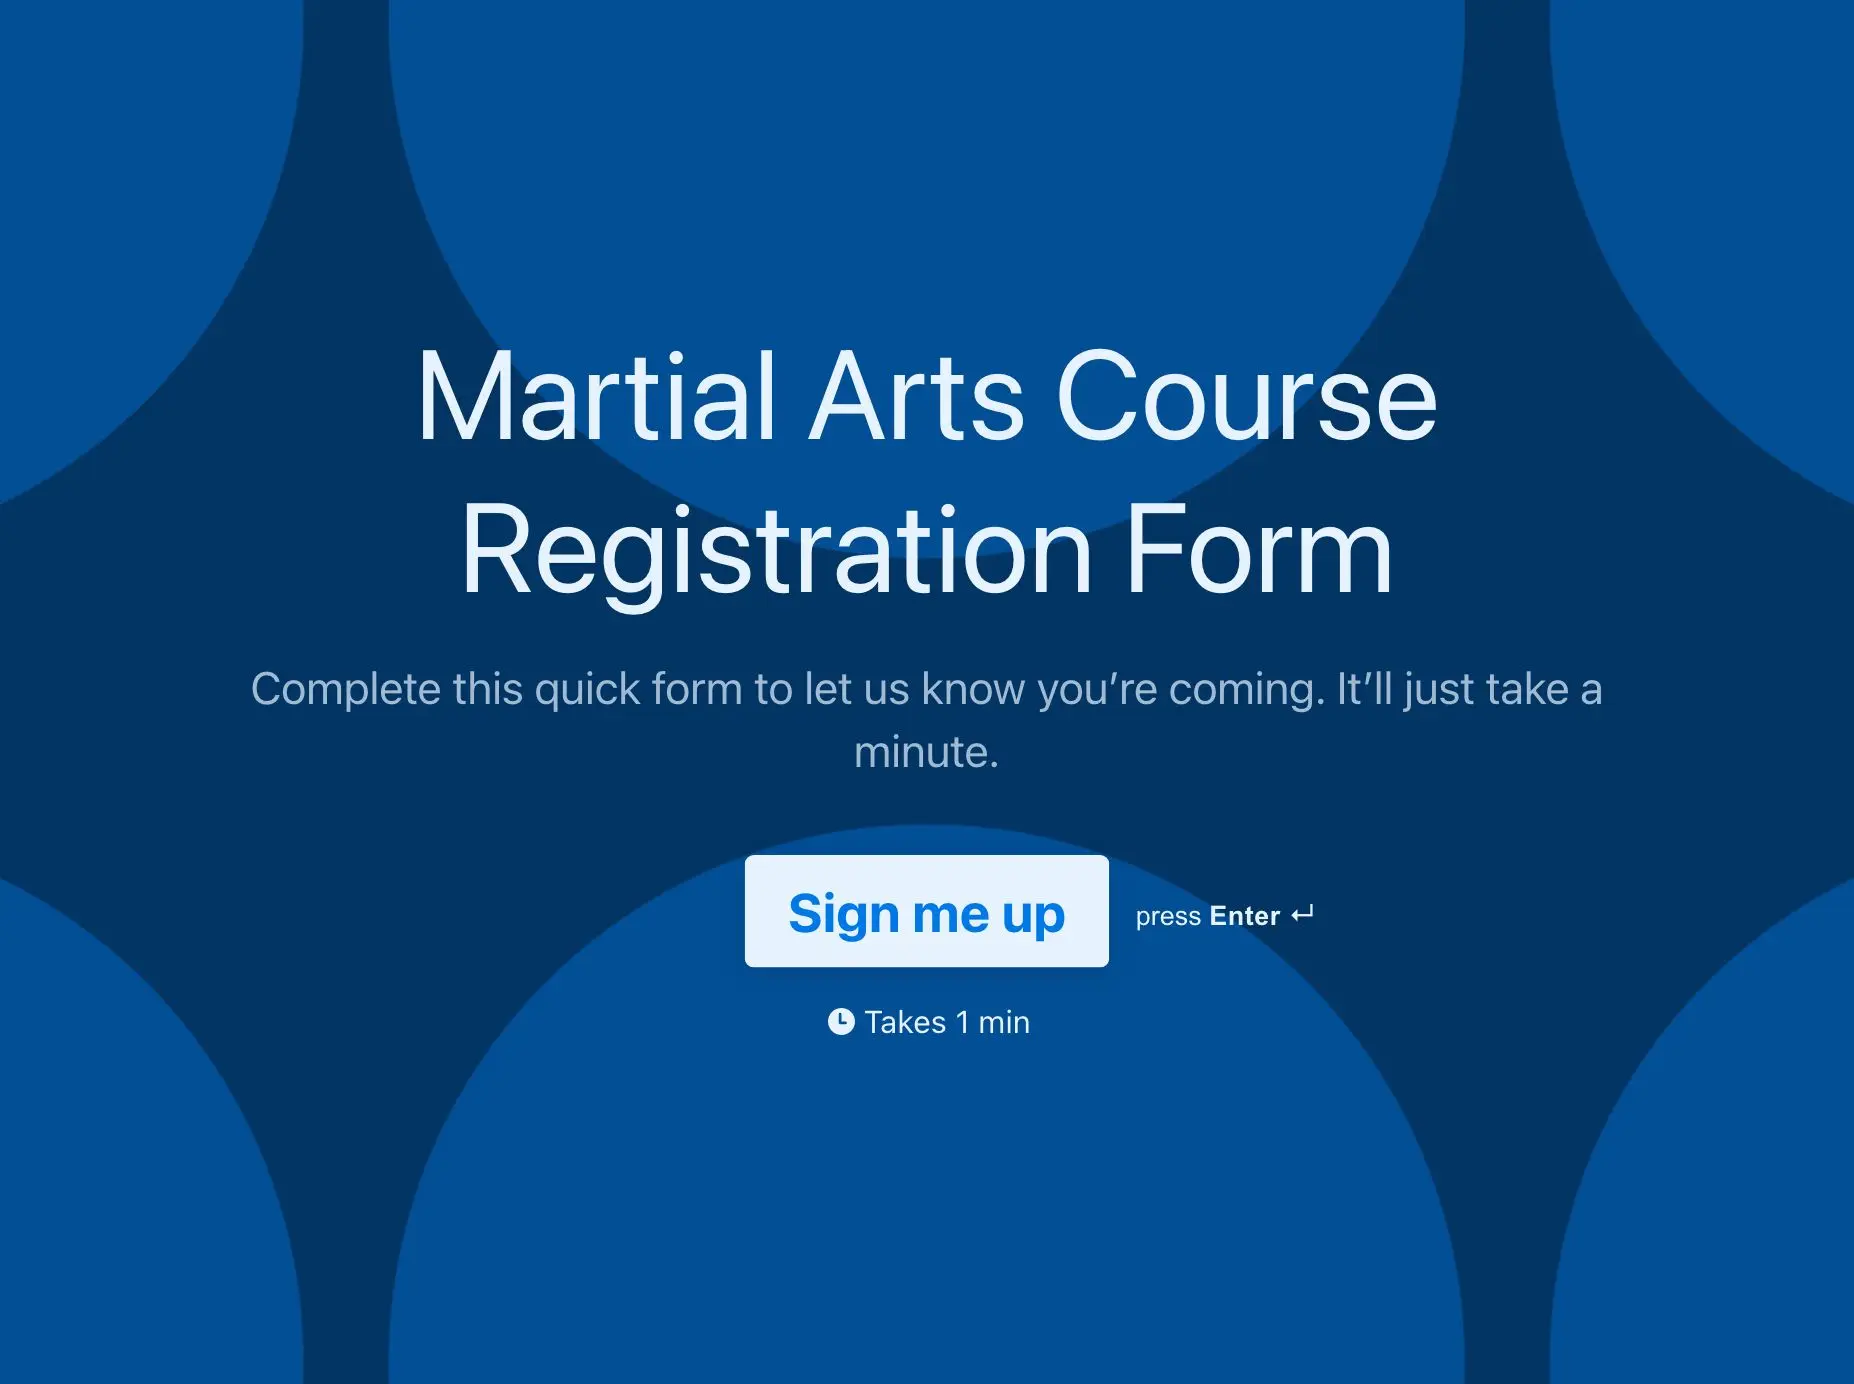 Martial Arts Course Registration Form Template Hero